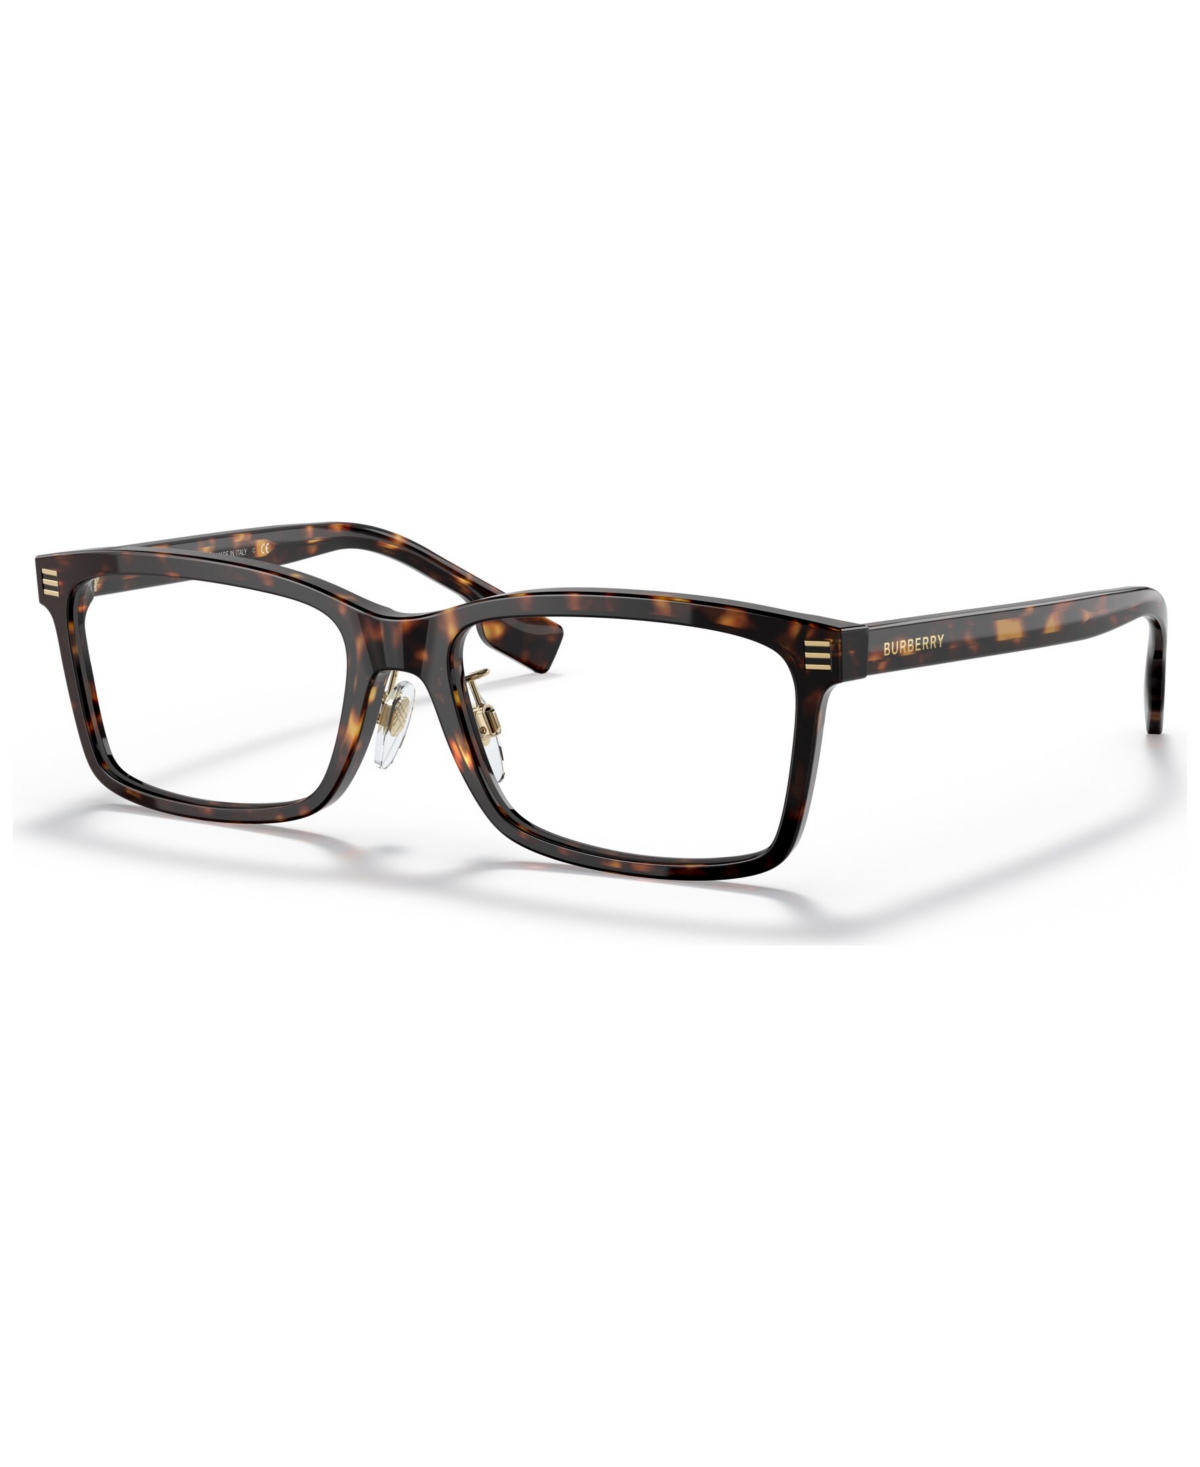 Men's Foster Eyeglasses, BE2352F 56 - Dark Havana